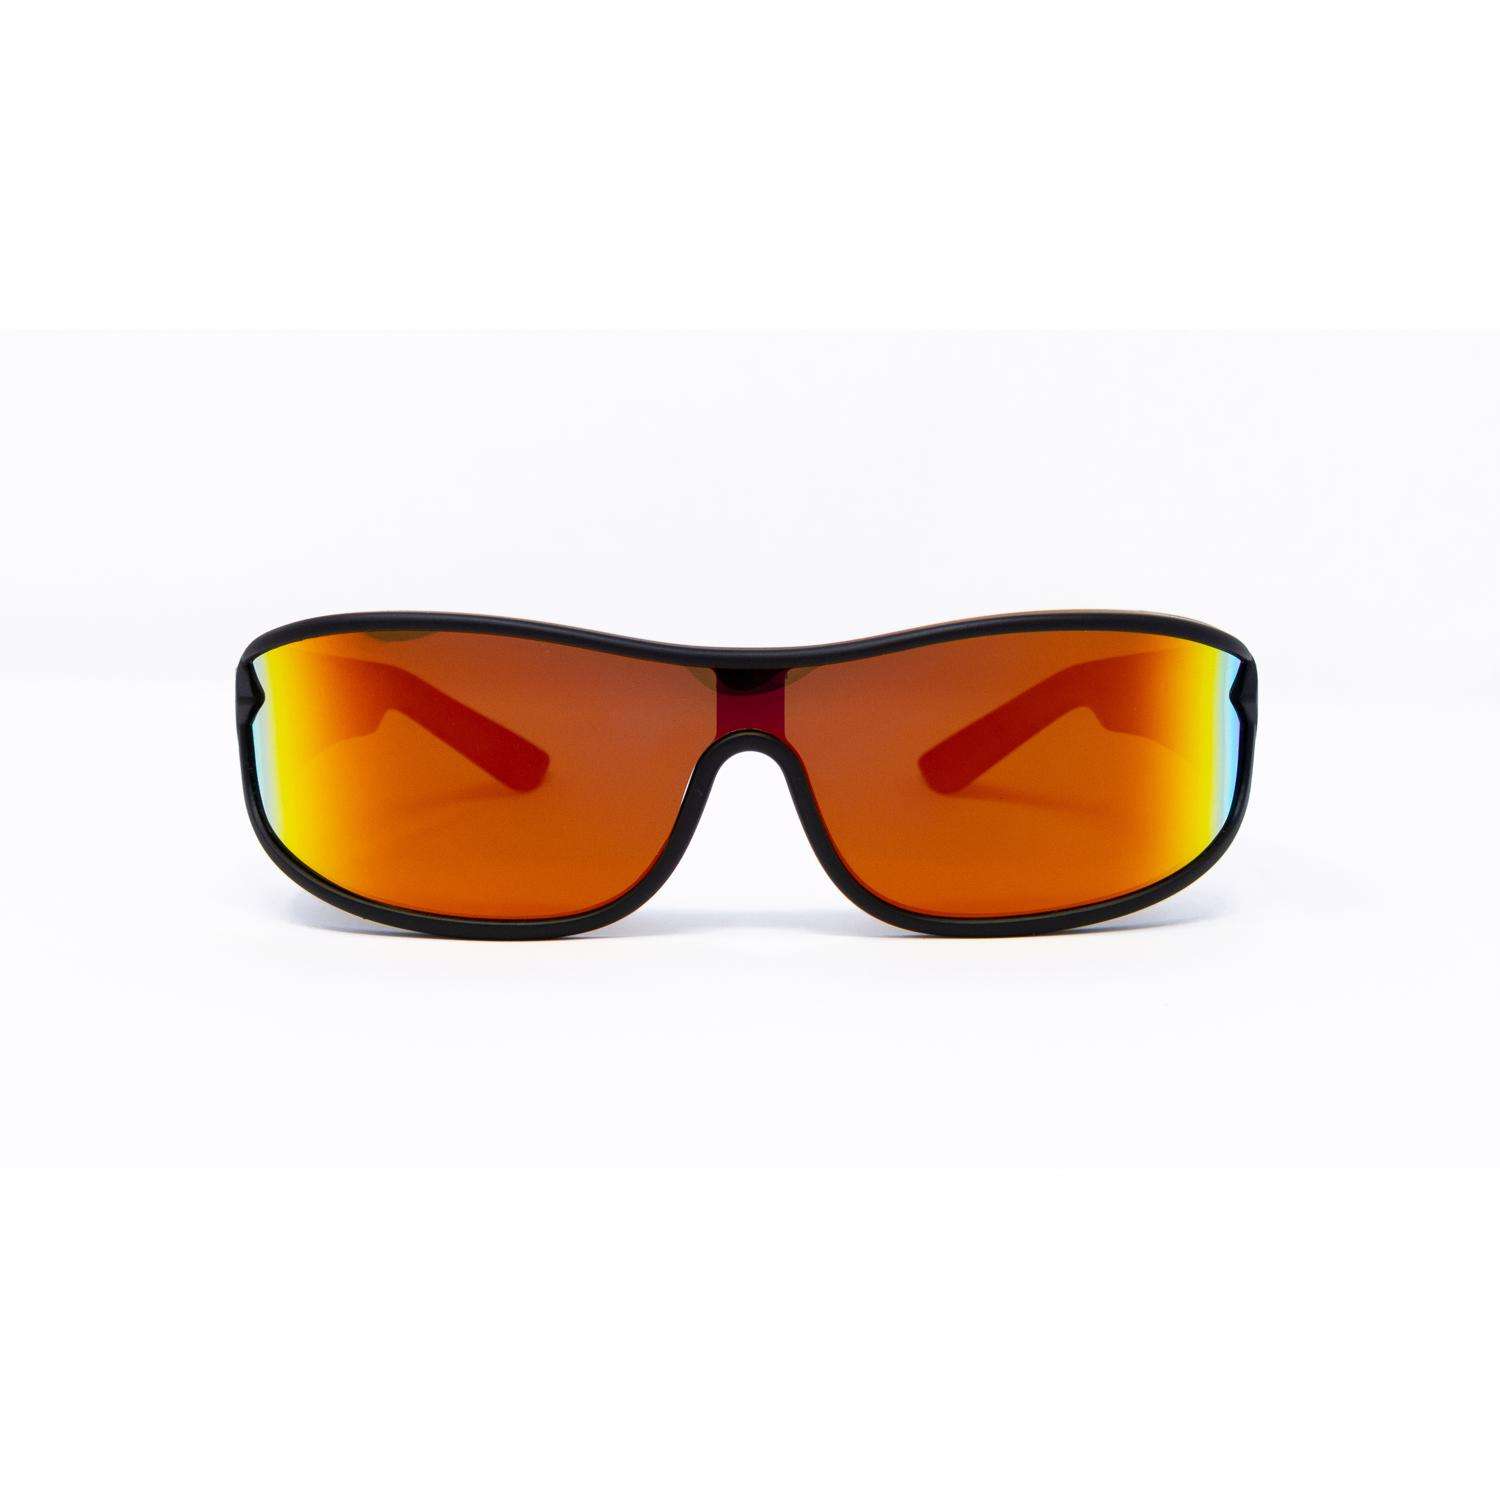 BattleVision Wrap Around Sunglasses 2 Pk